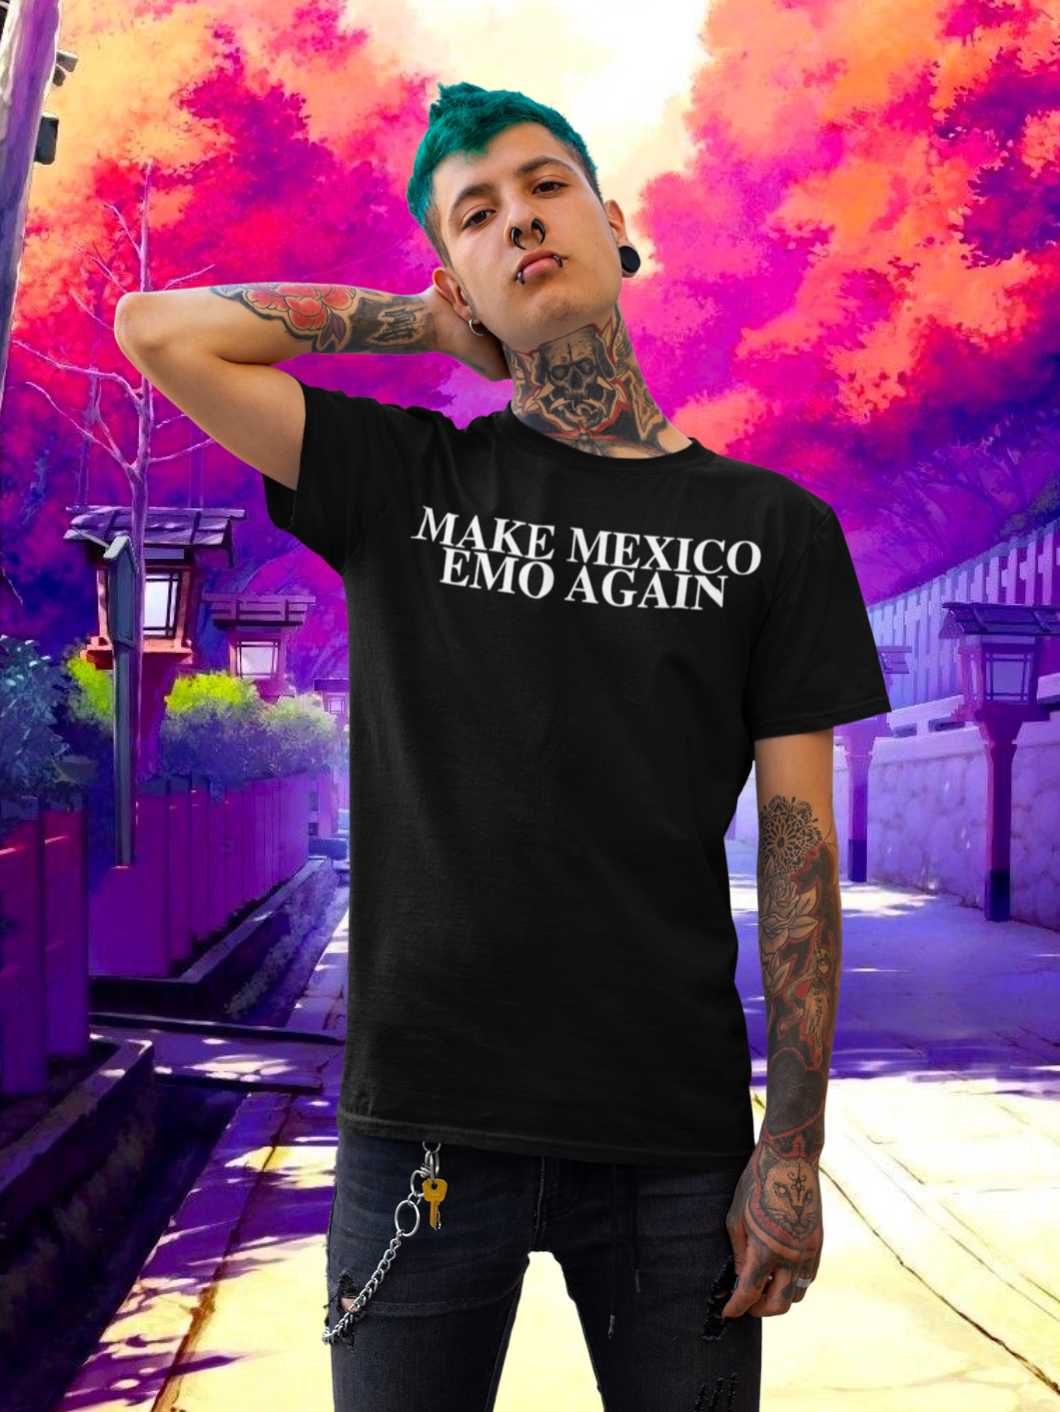 Make Mexico Emo Again